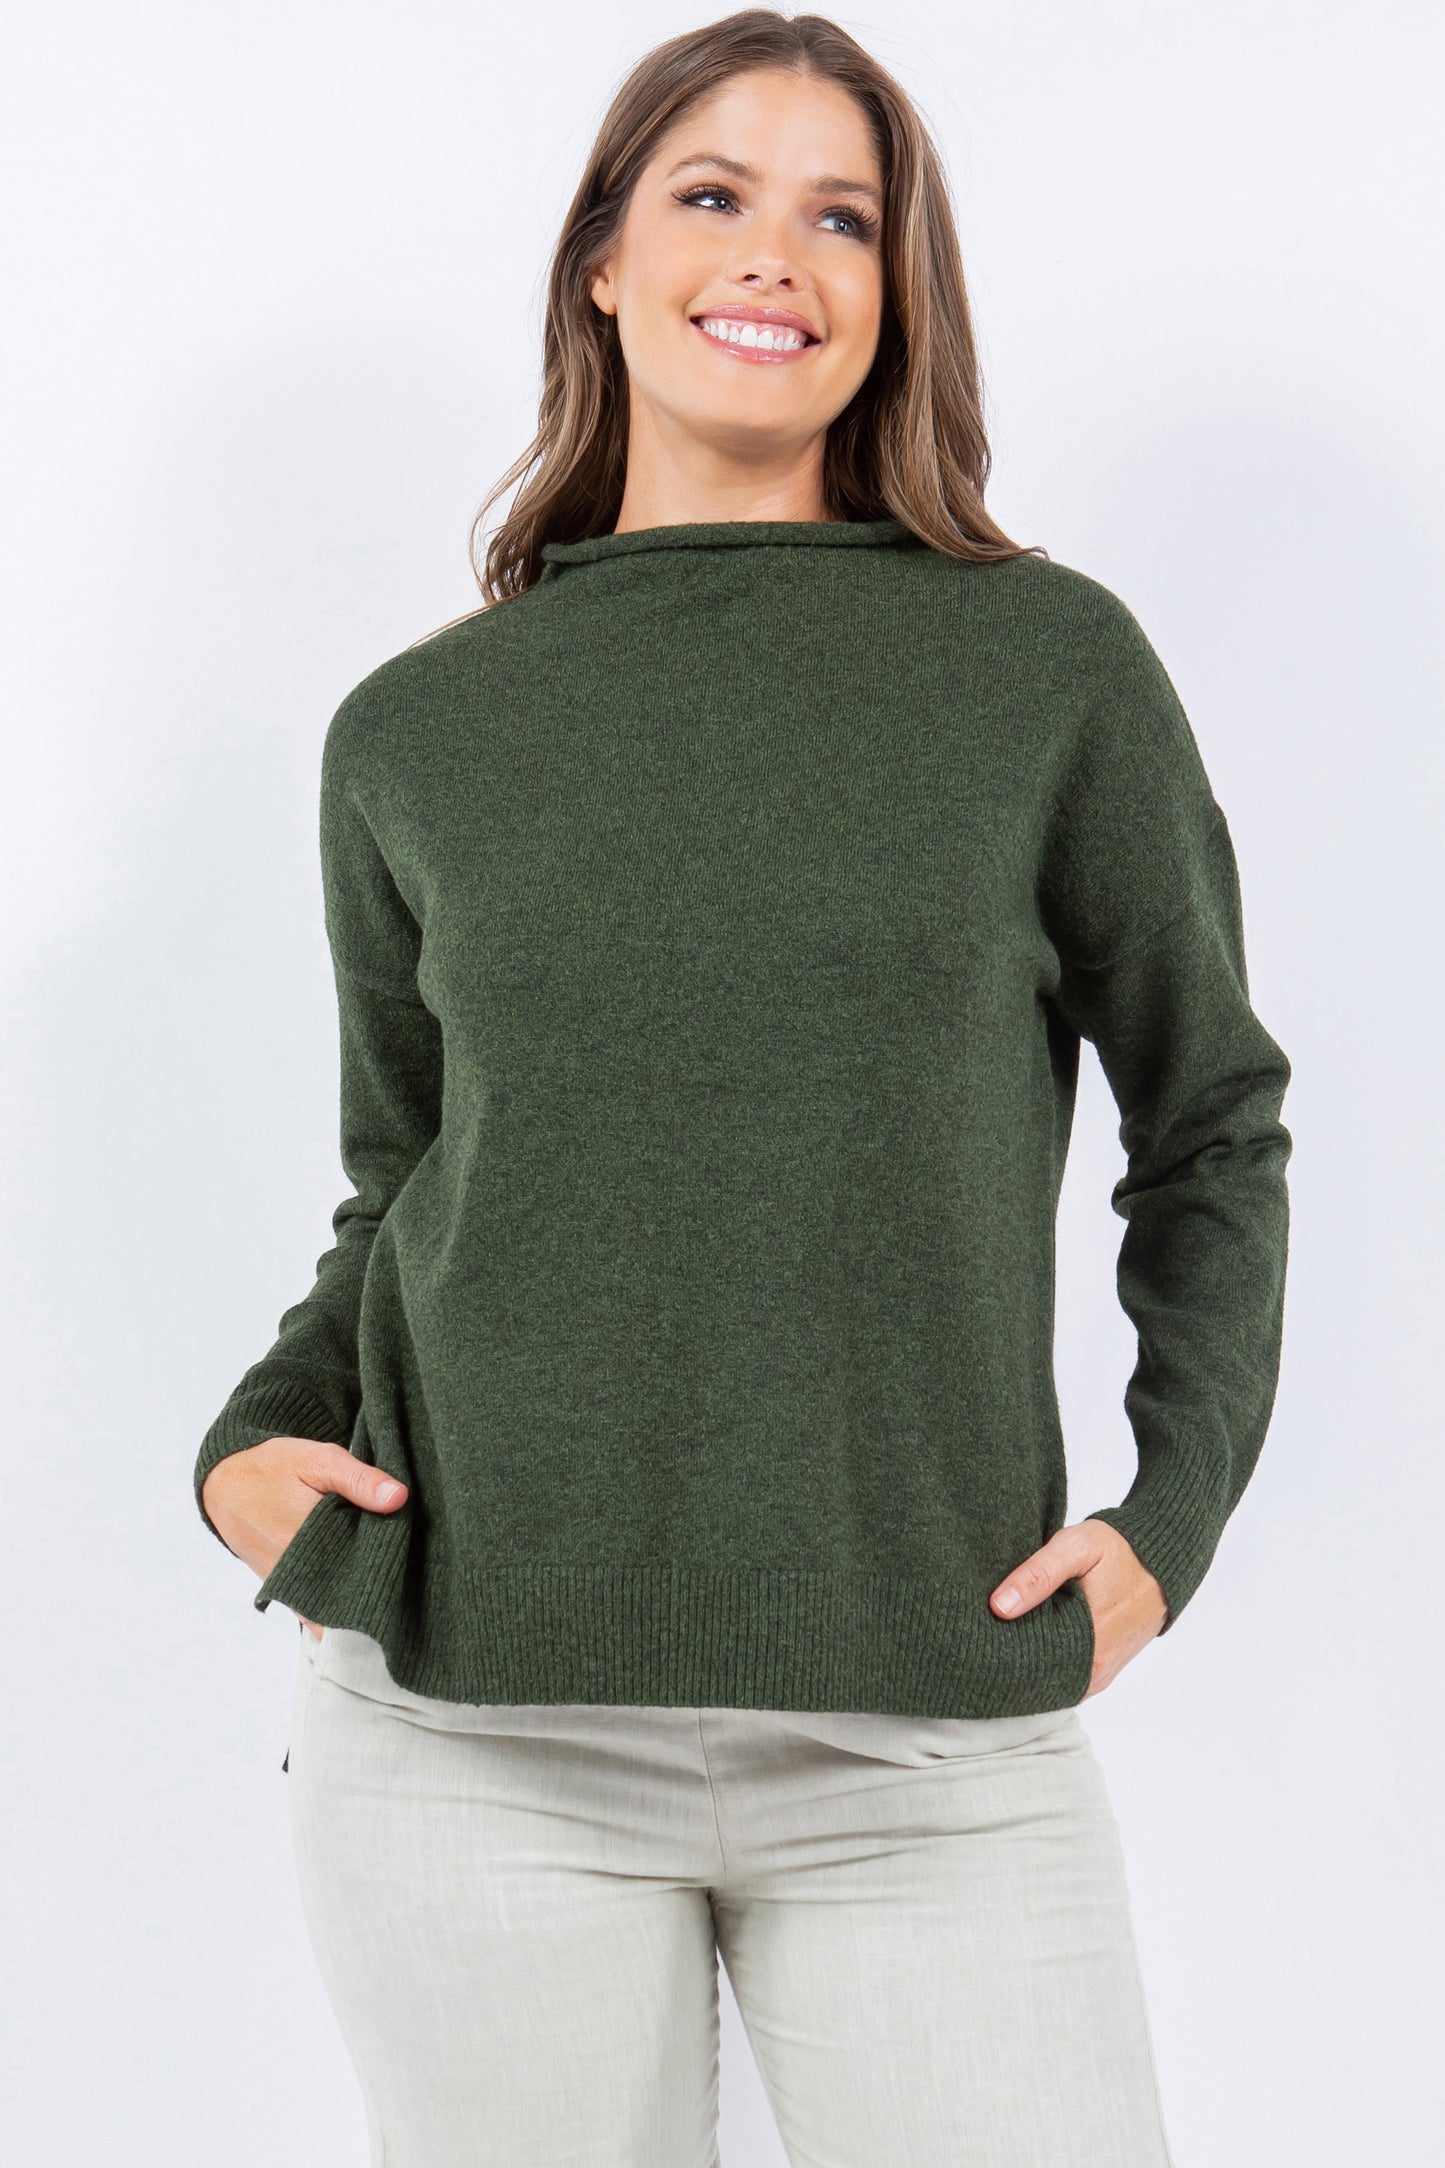 Effortless Elegance Sweater